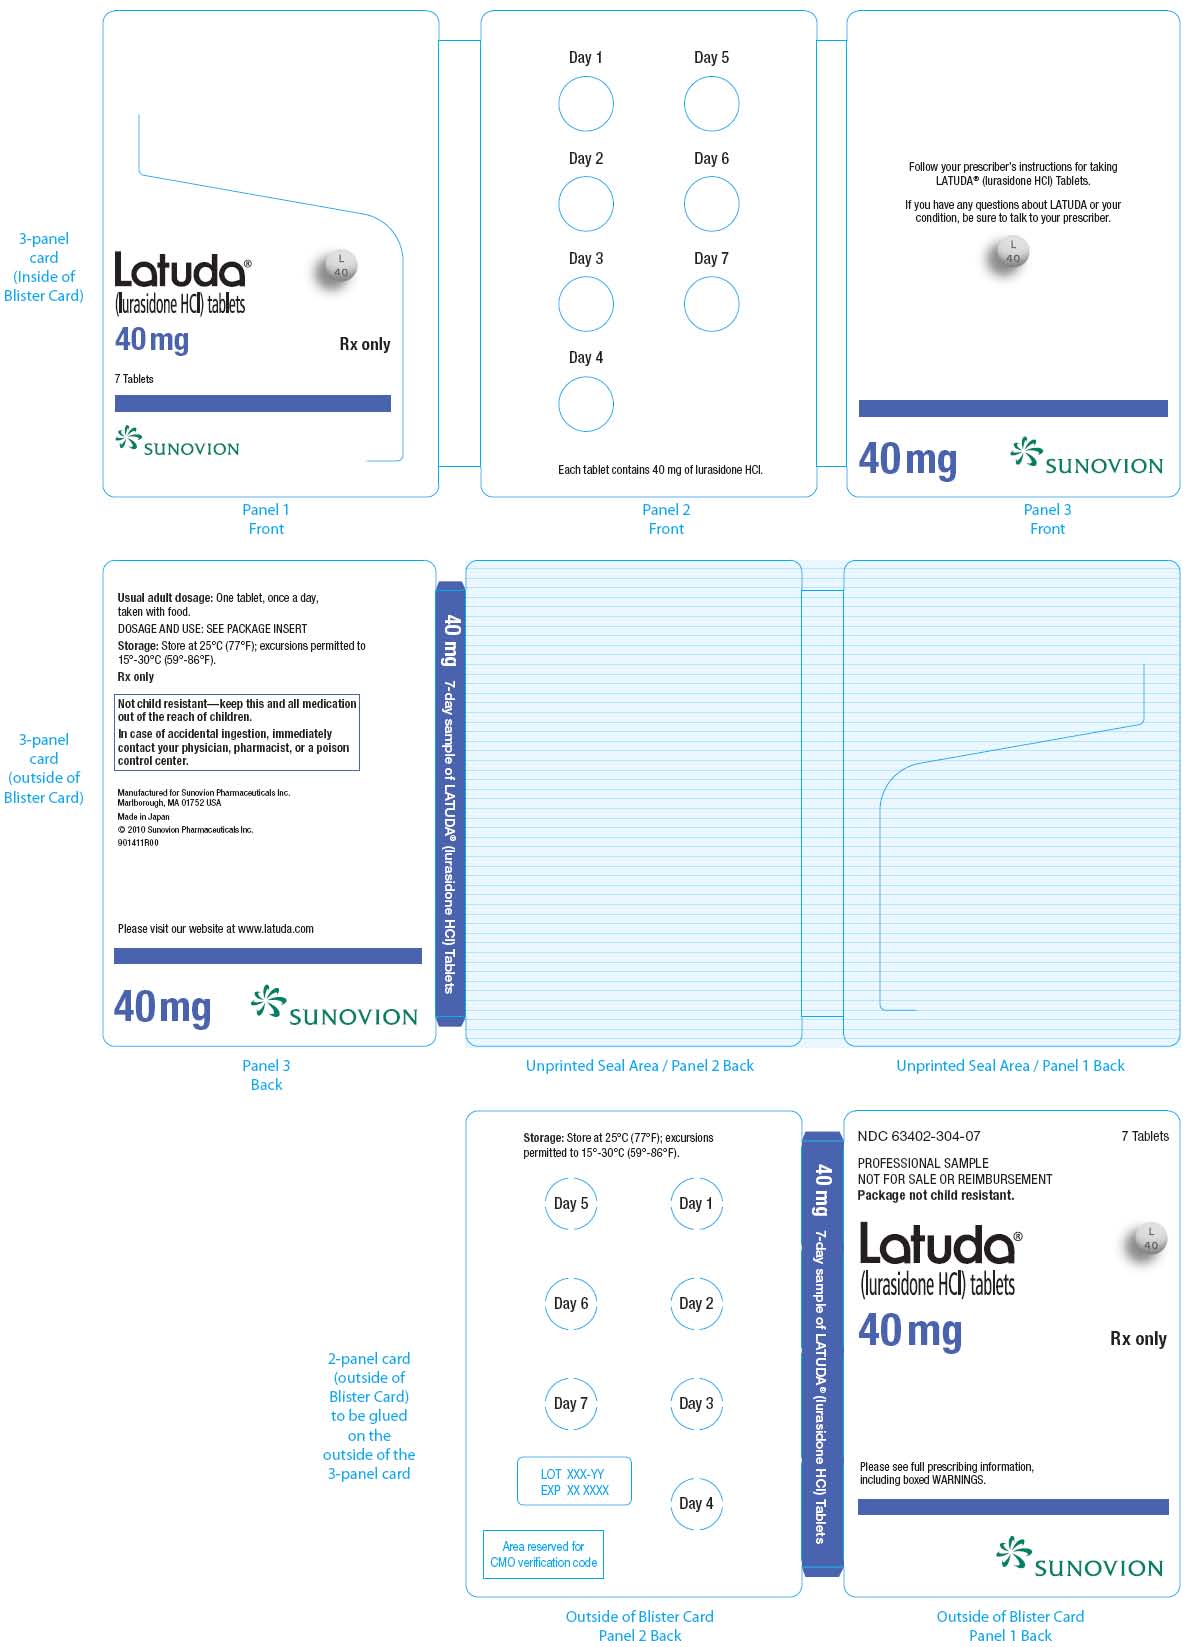 PACKAGE LABEL - PRINCIPAL DISPLAY PANEL - 40 mg Blister
